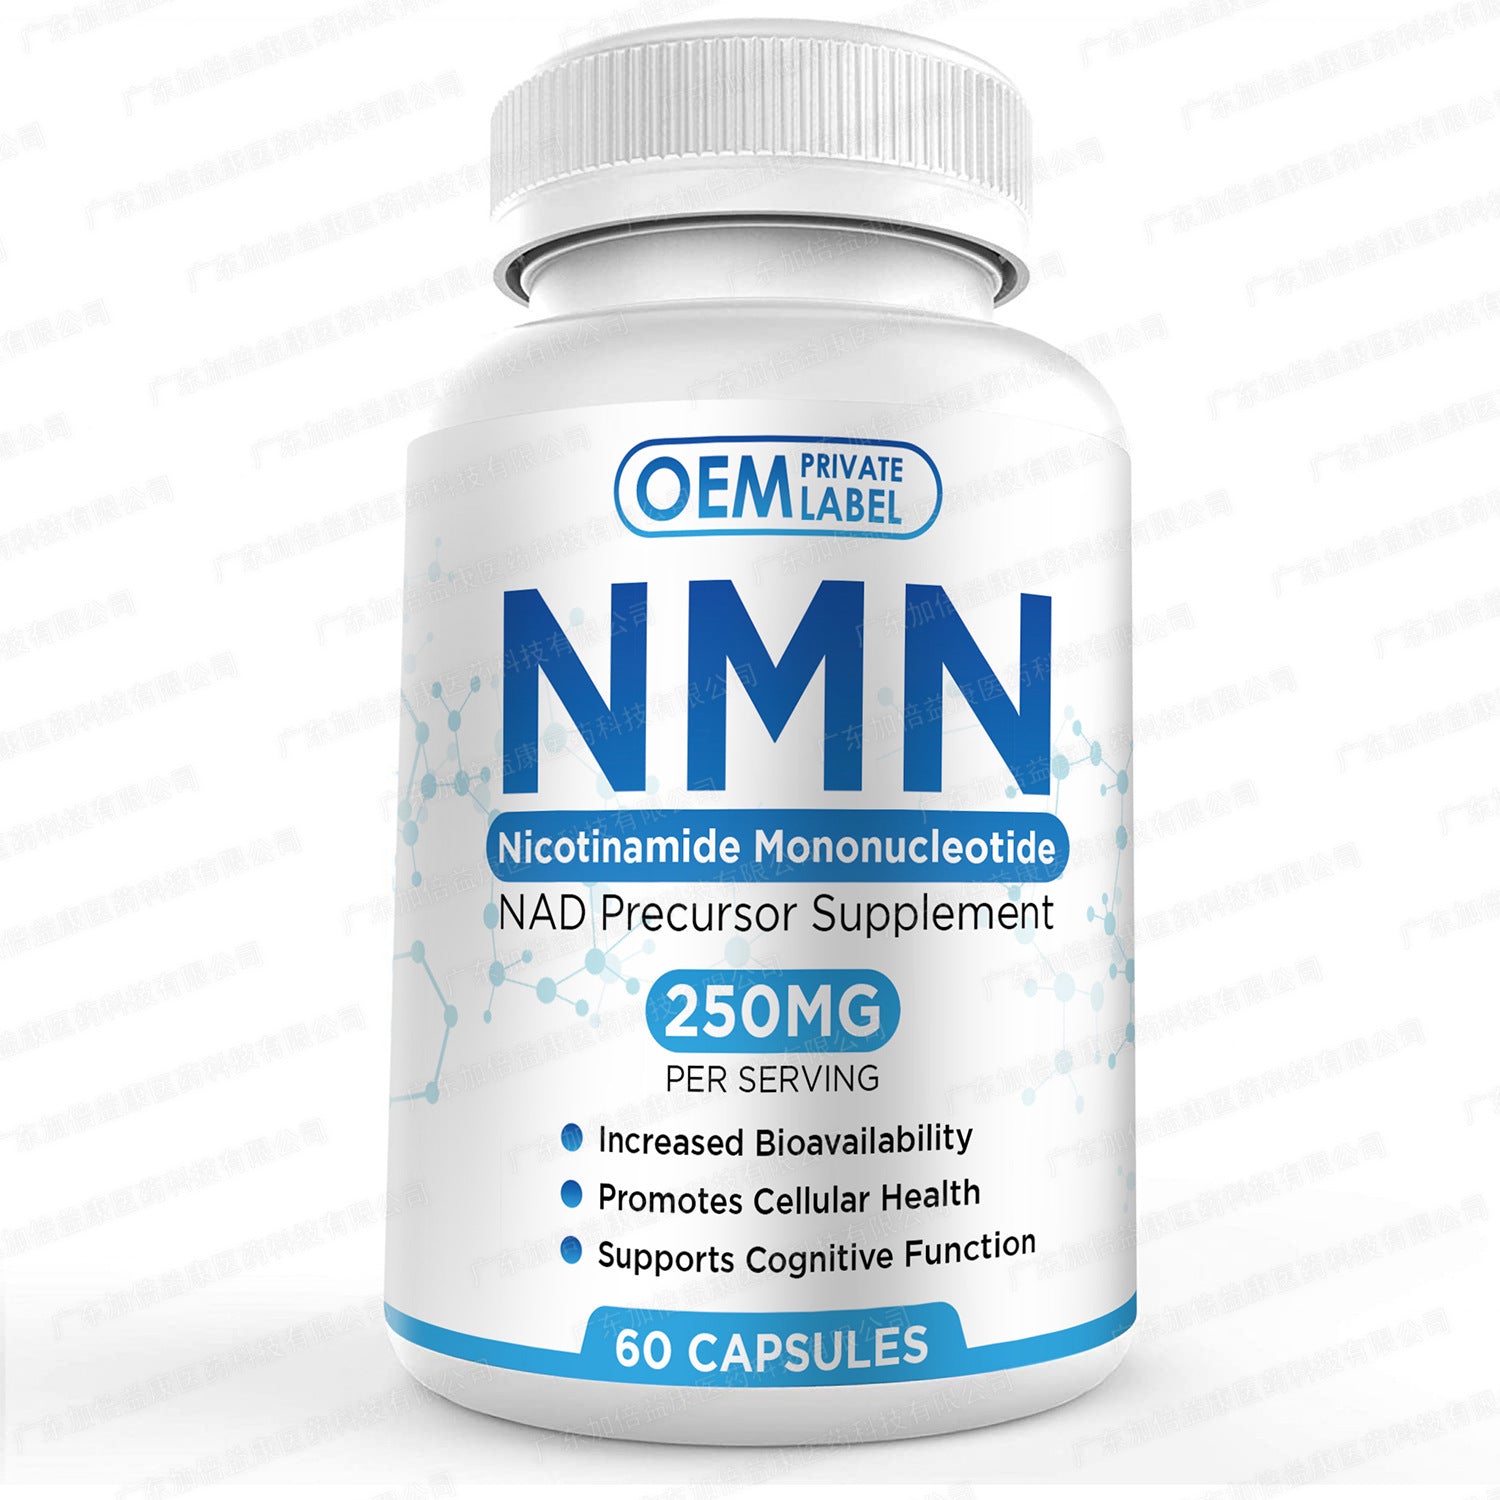 N.M.N capsuleAnti-aging capsuleNicotinamide Mononucleotide Capsule